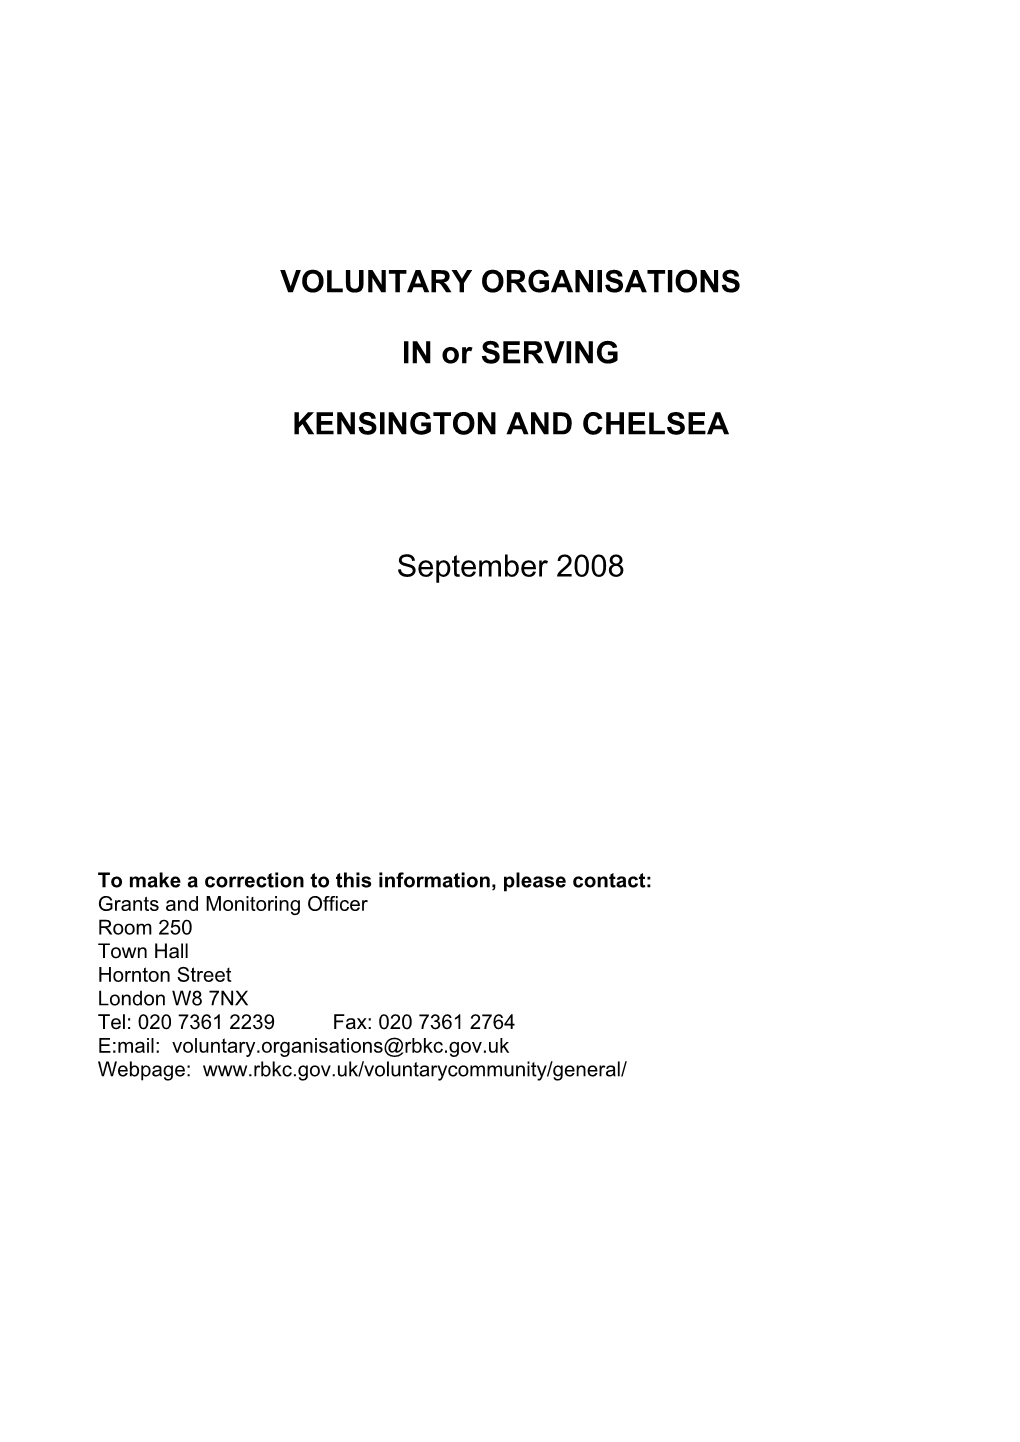 Voluntary Organisations in Or Serving Kensington and Chelsea September 2008